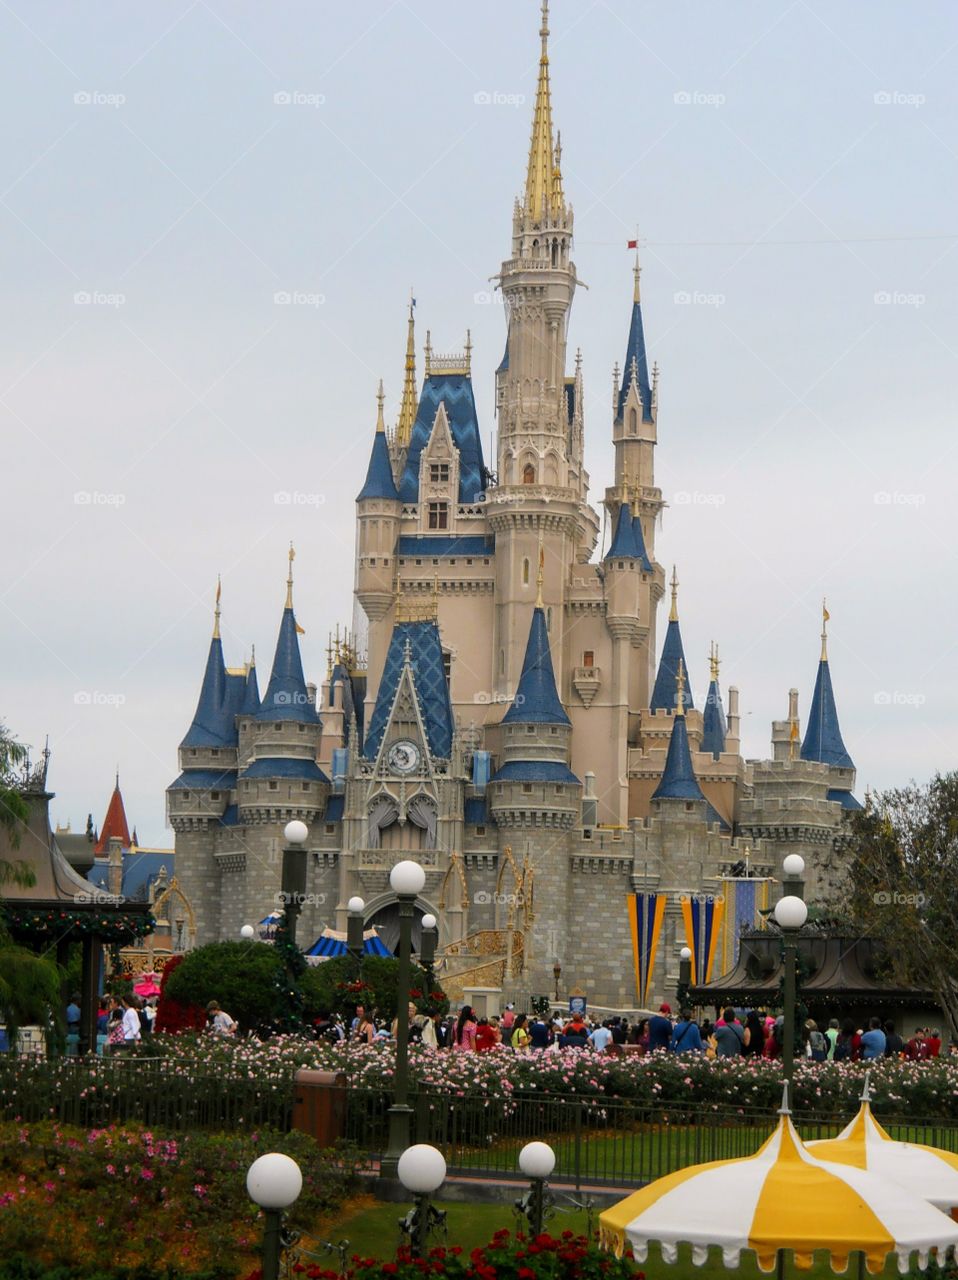 Disney Castle - FL - Dec. 2012